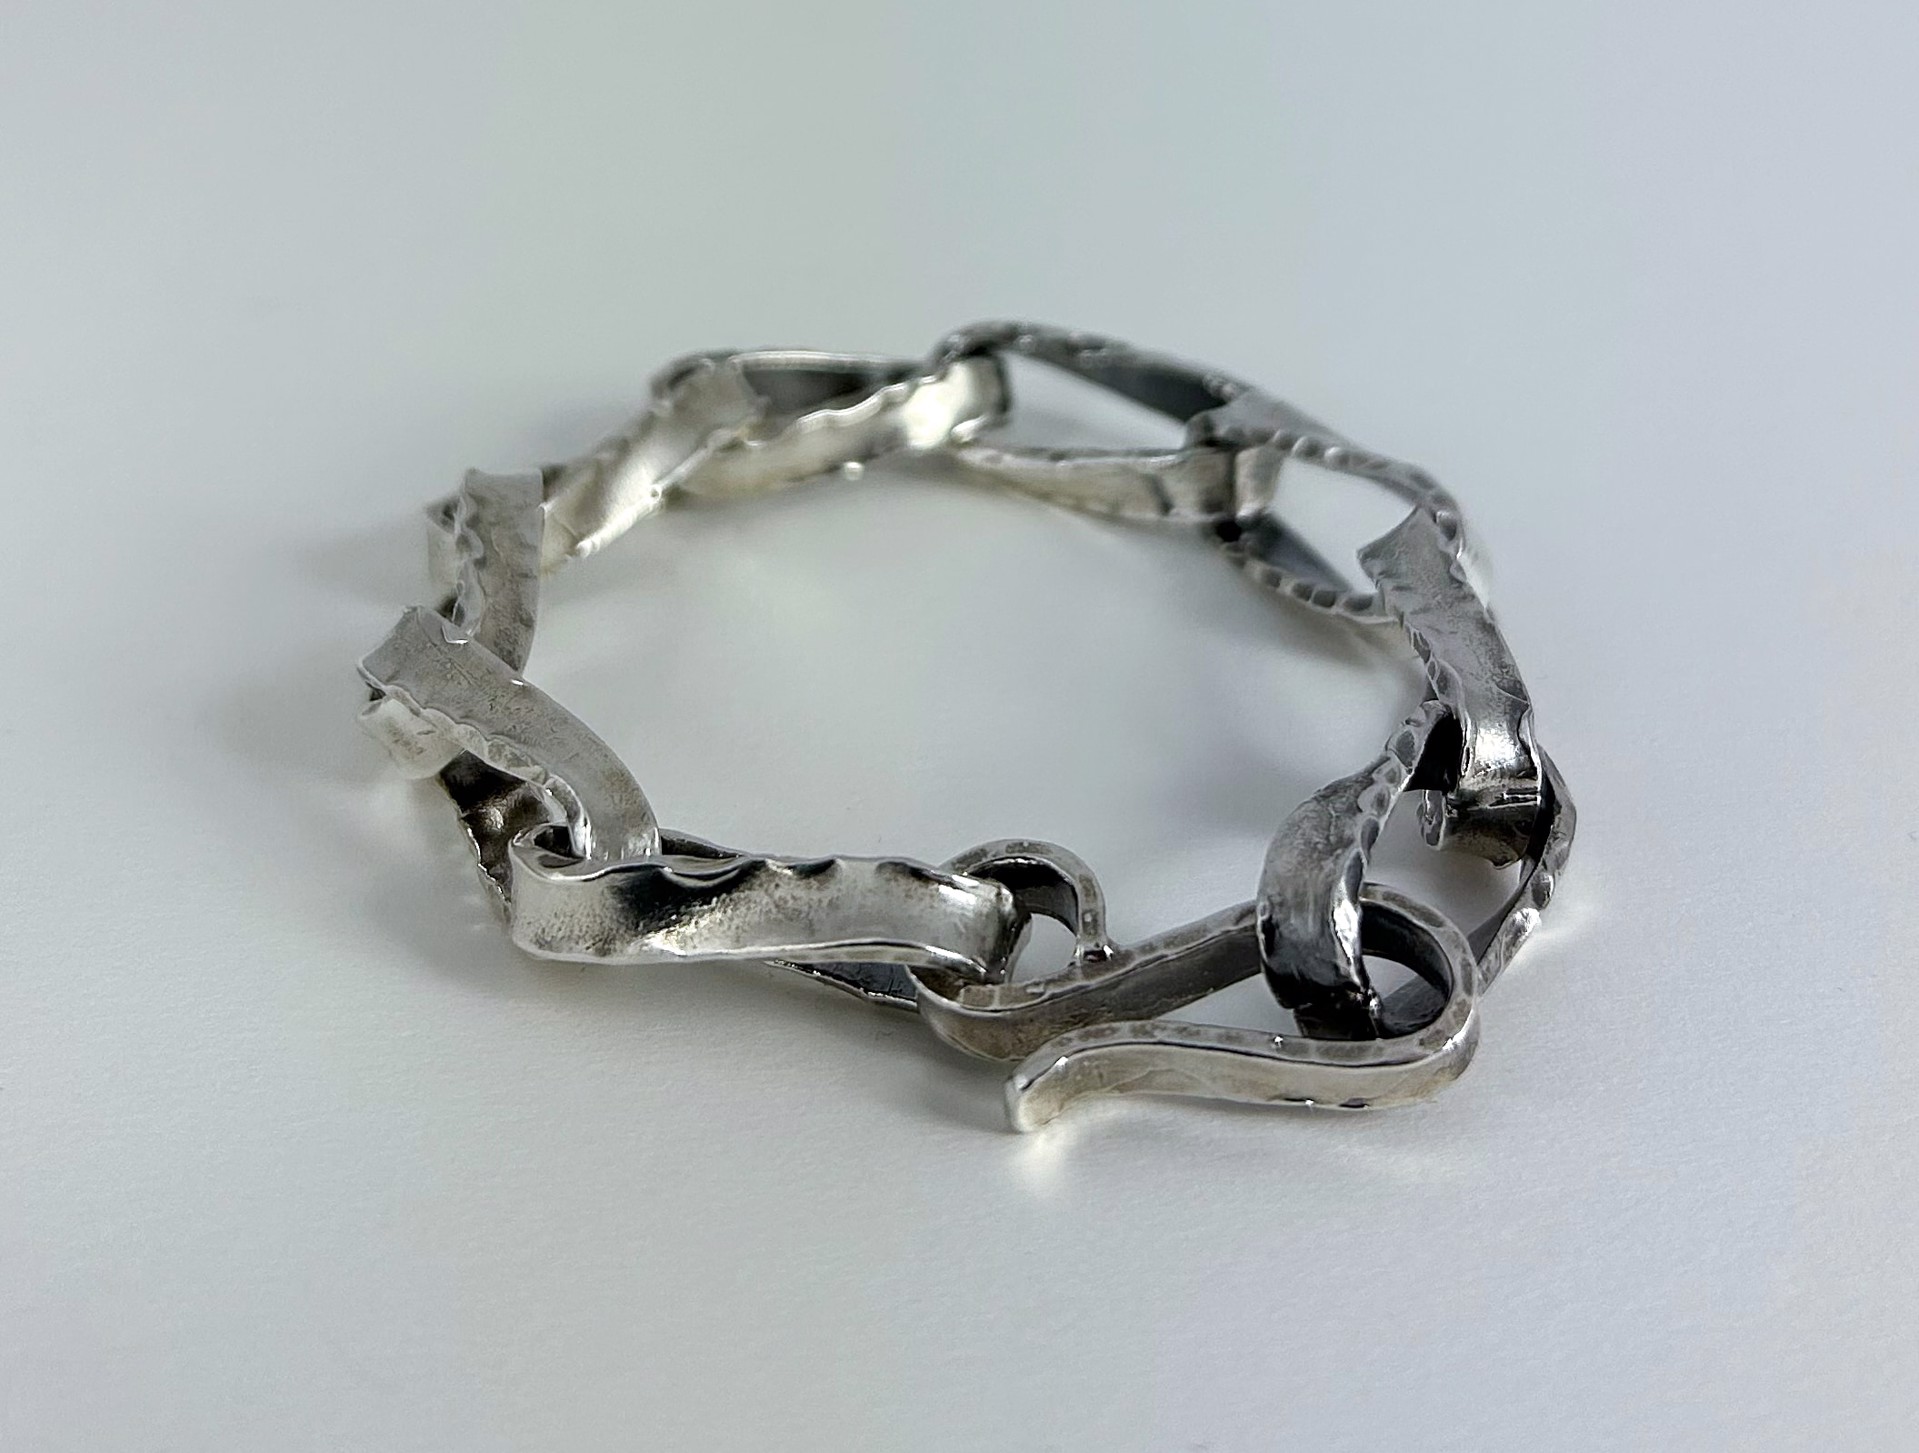 Large link rustic bracelet by Jeri Mitrani